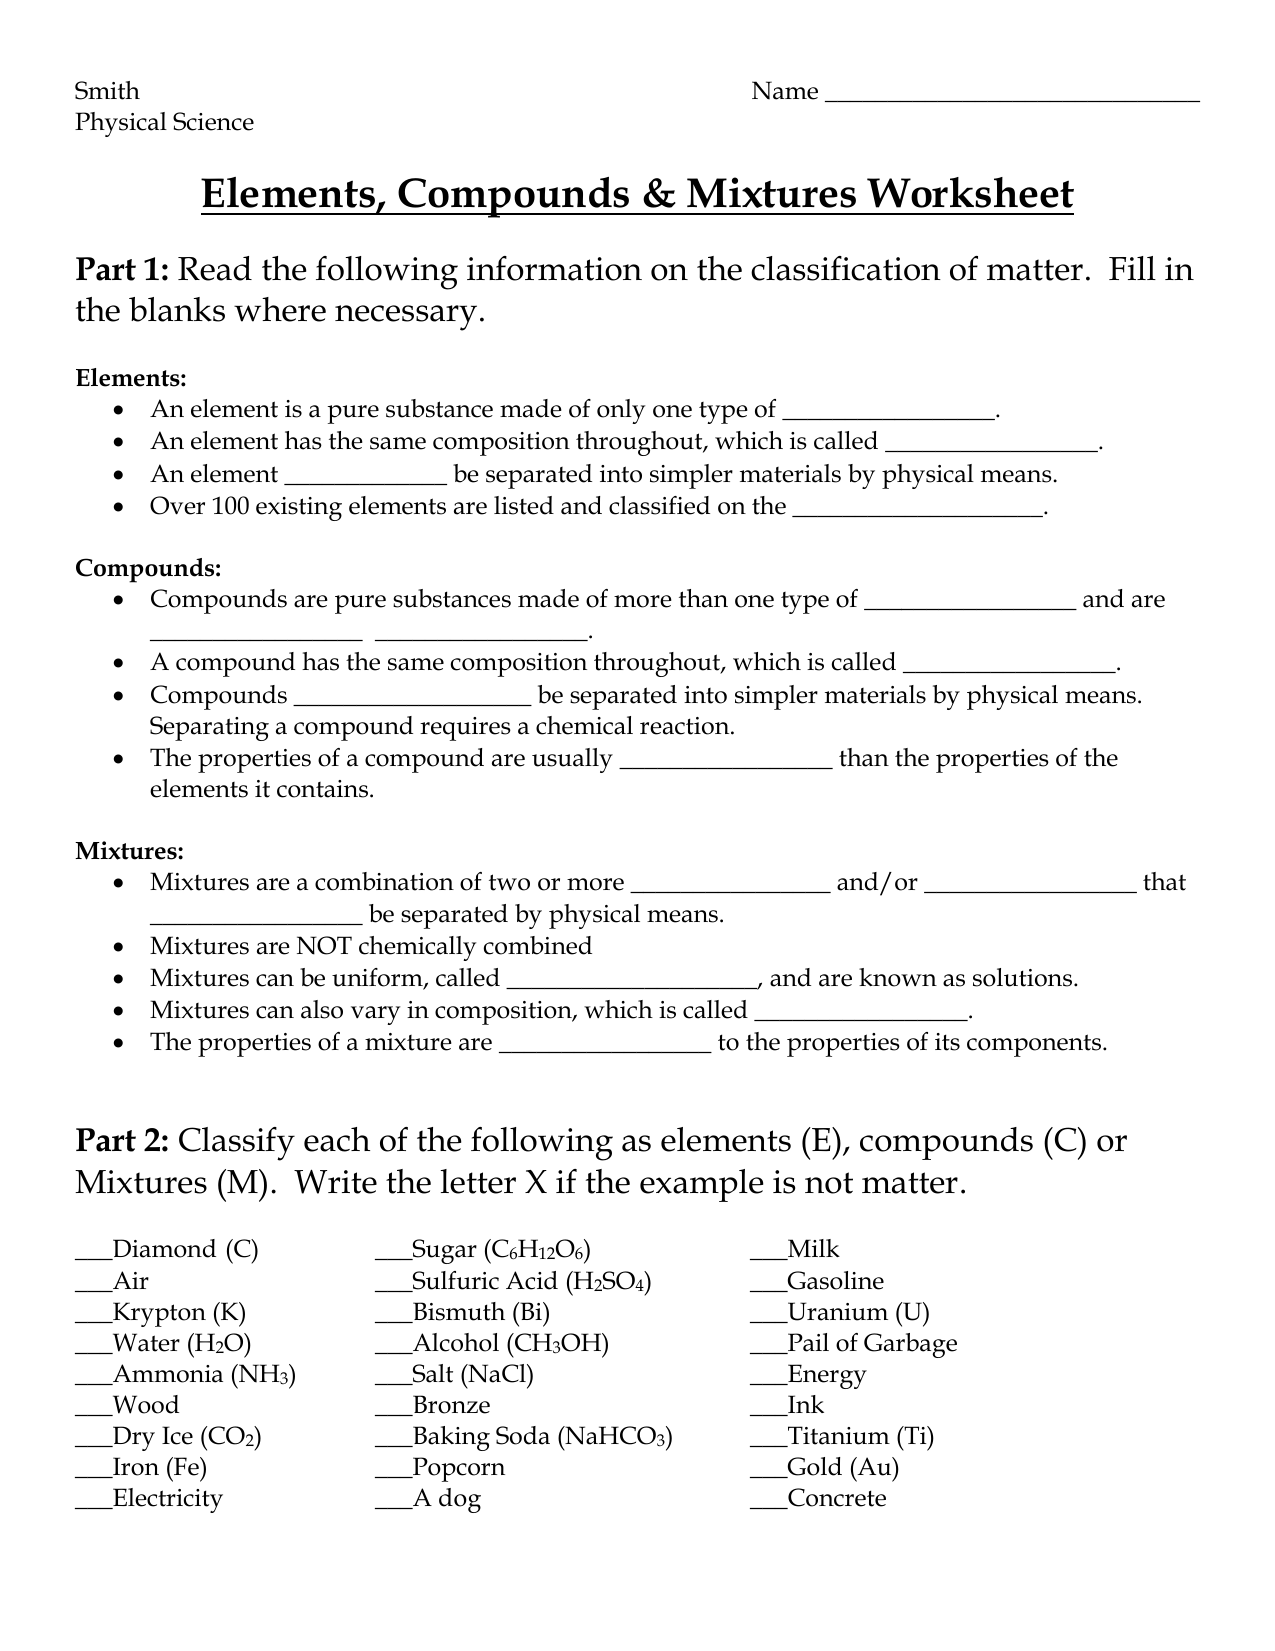 Elements, Compounds & Mixtures Worksheet Throughout Elements Compounds Mixtures Worksheet Answers